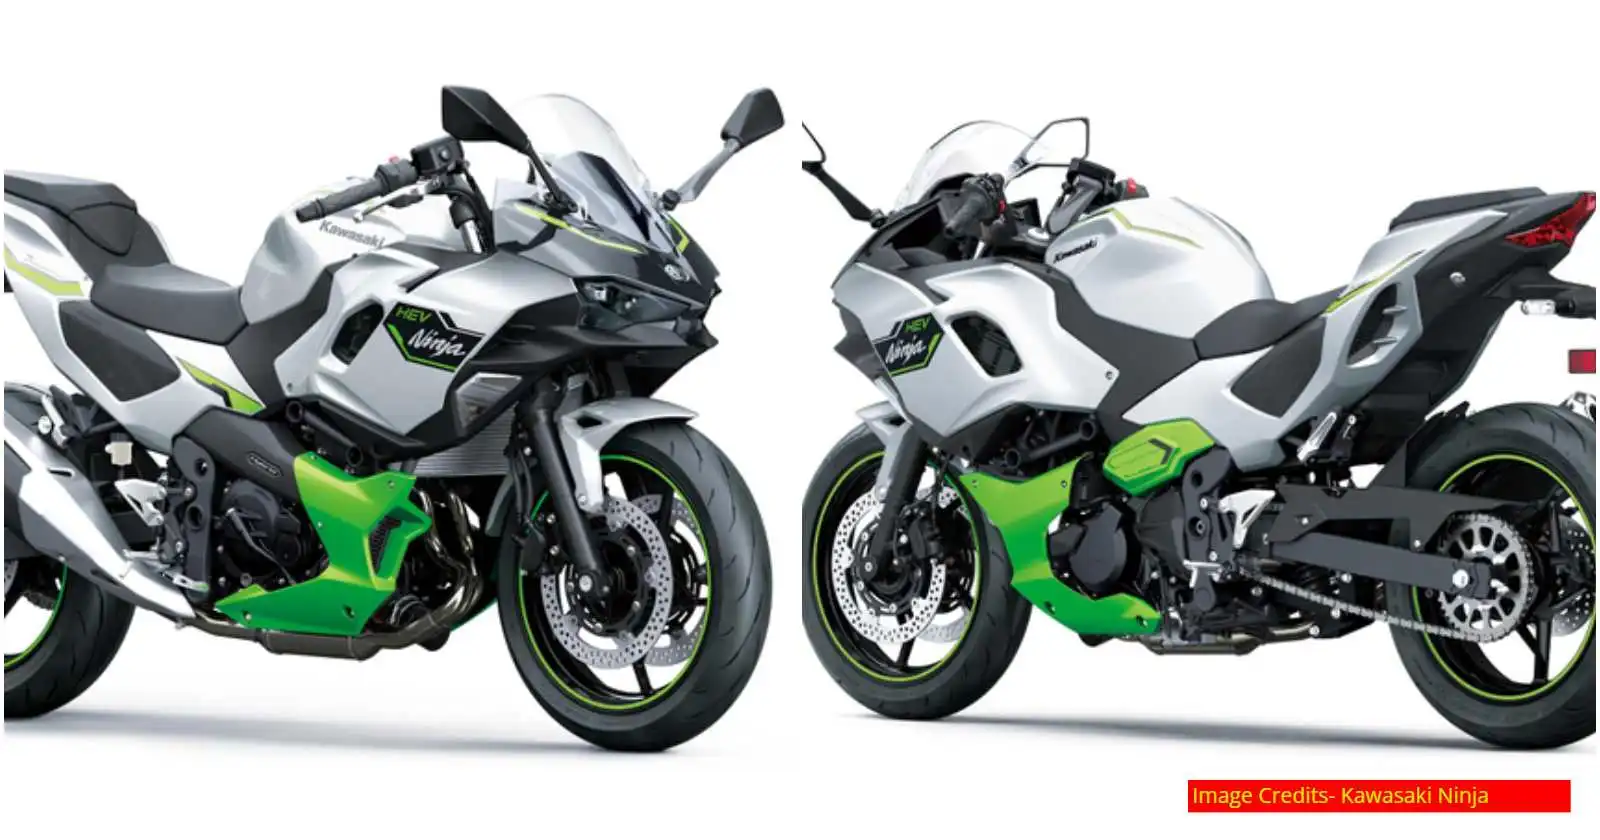 Kawasaki Ninja 7 Hybrid Bike Details Explained Clearly in kannada By Automobile News Experts.